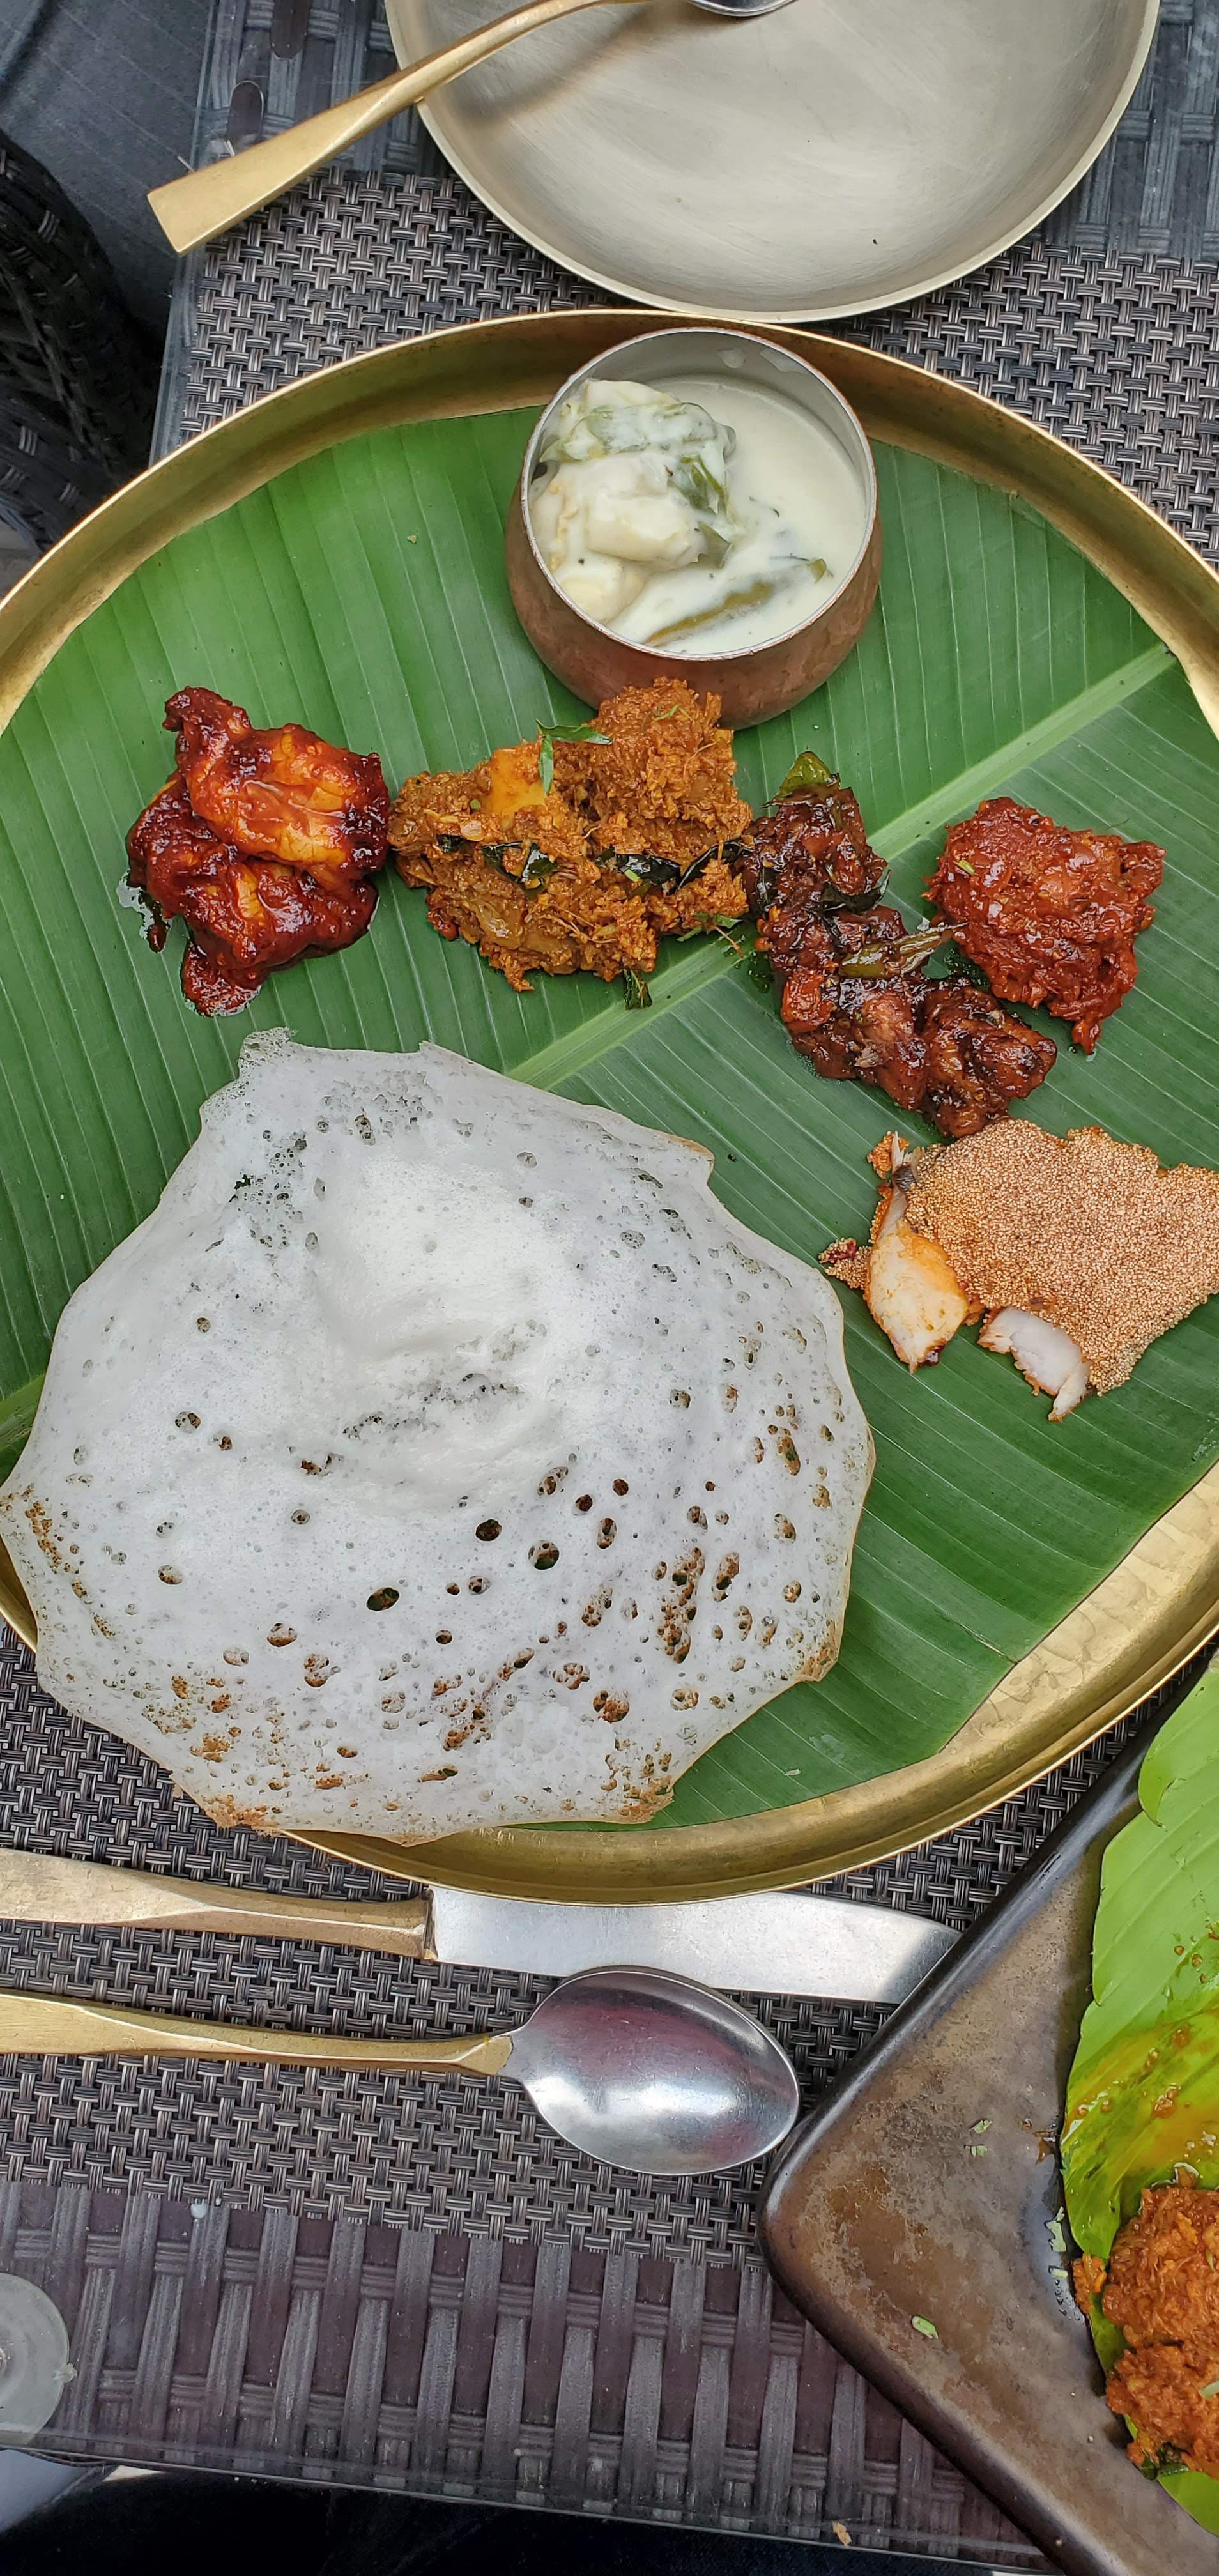 Dish,Food,Cuisine,Ingredient,Neer dosa,Andhra food,Produce,Meal,Staple food,Indian cuisine